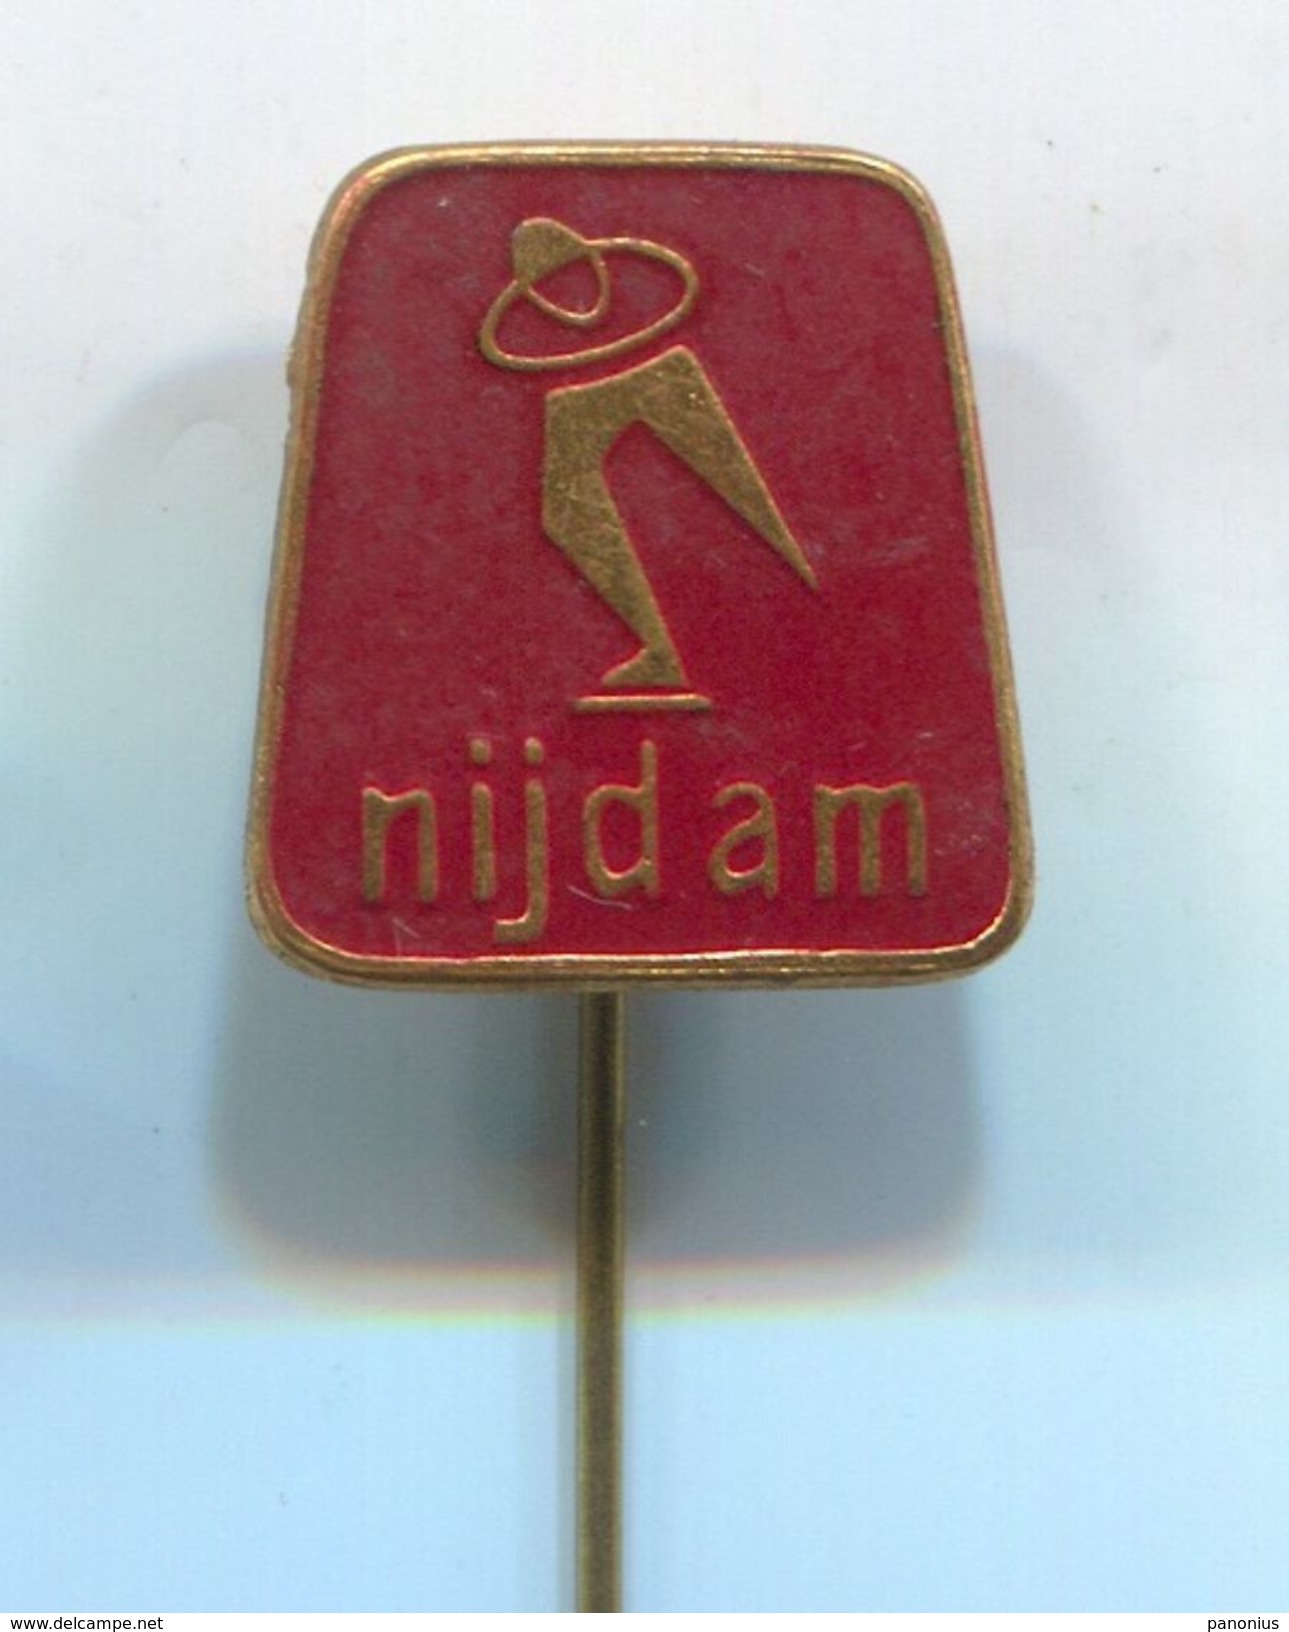 Ice Figure Skating - NIJDAM, Vintage Pin, Badge, Abzeichen - Patinage Artistique